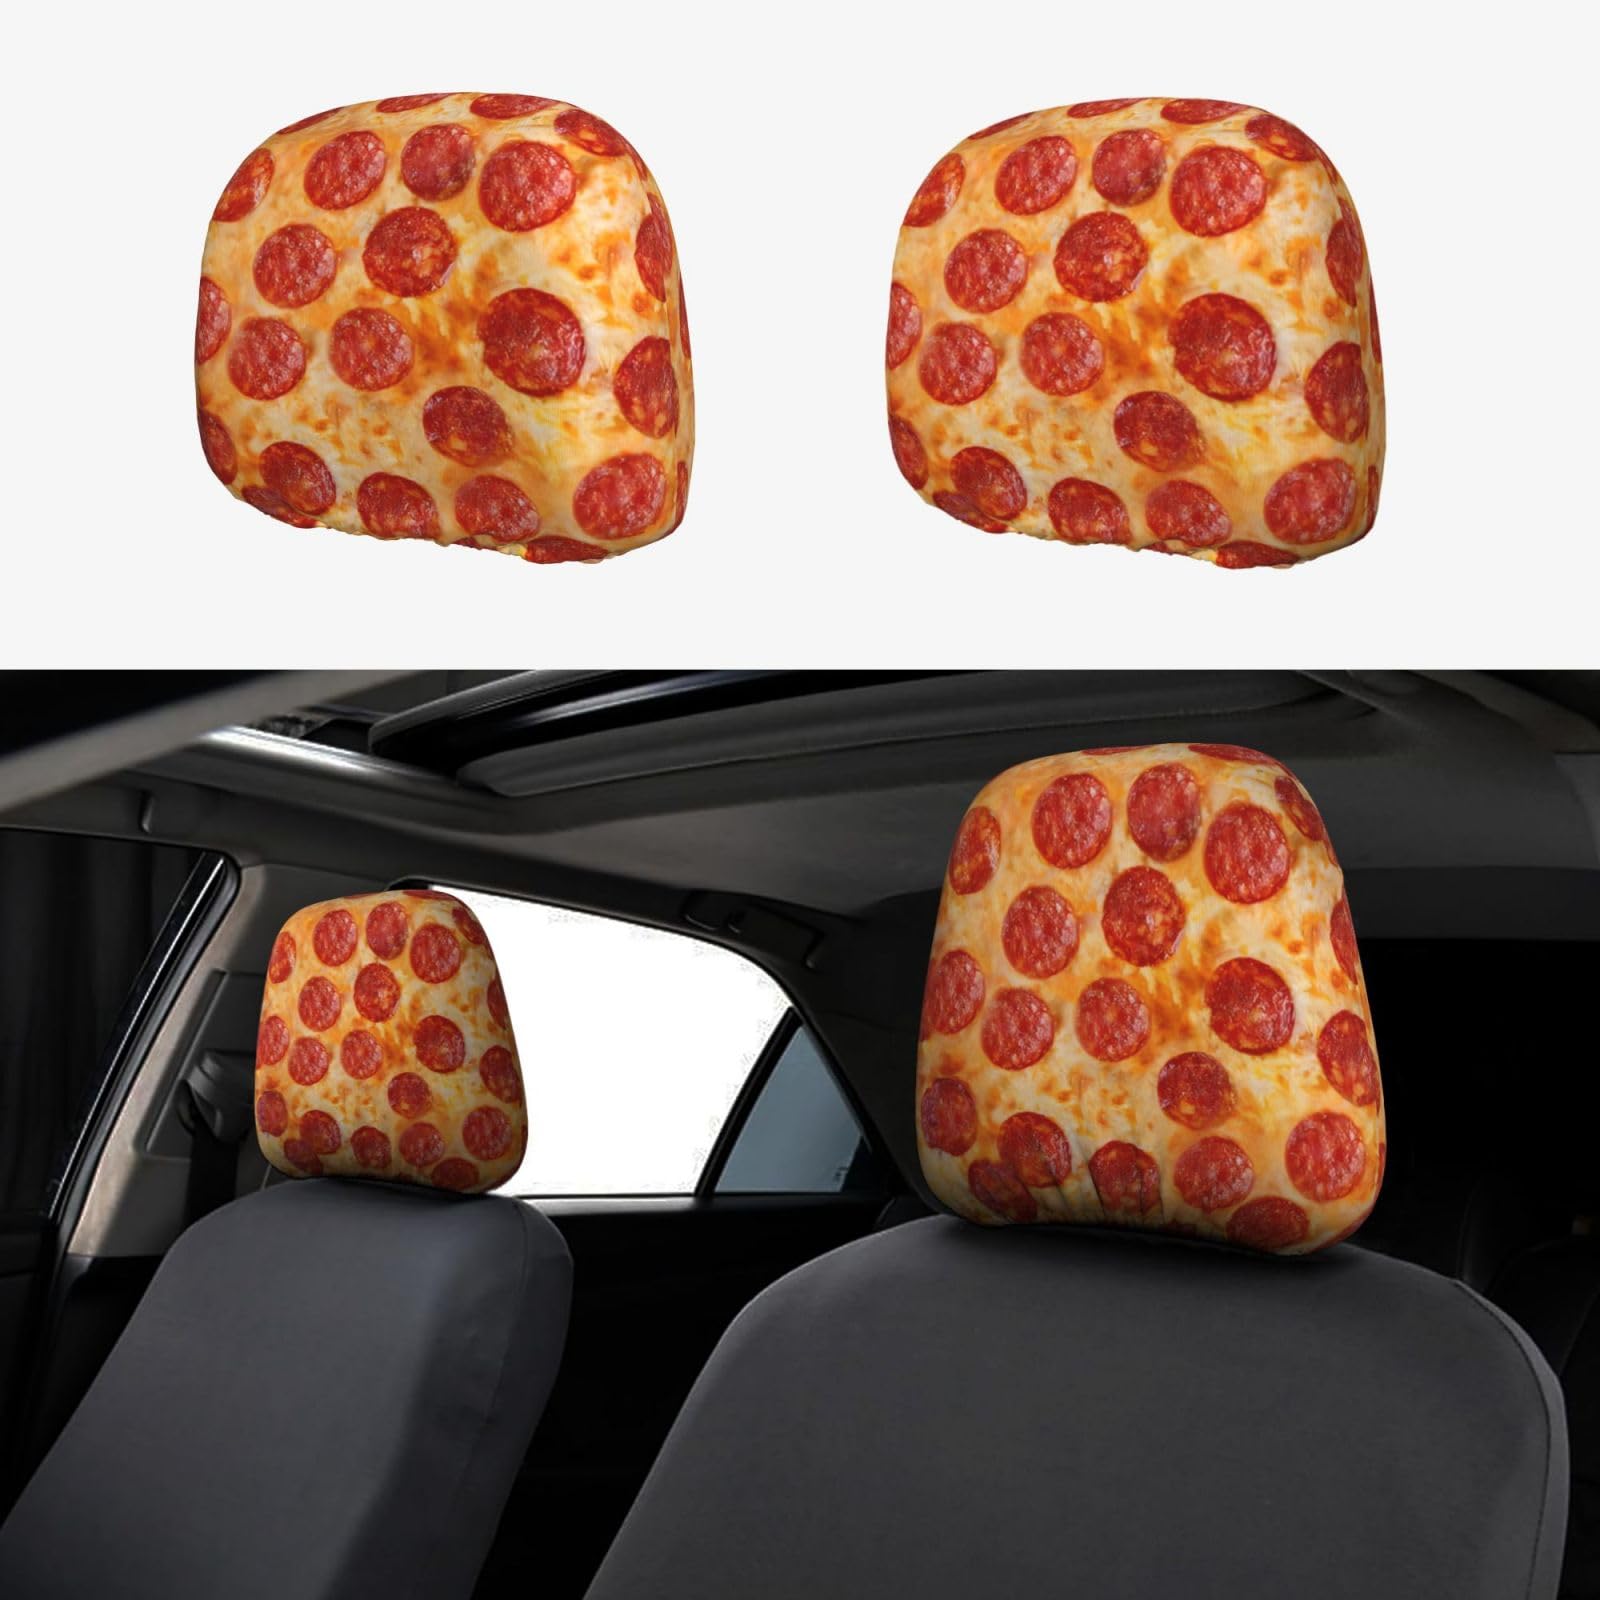 CRPPSYYR 3D Pizza Pepperoni bedruckter Auto-Kopfstützenbezug, 2 Stück, universeller Sitzbezug von CRPPSYYR